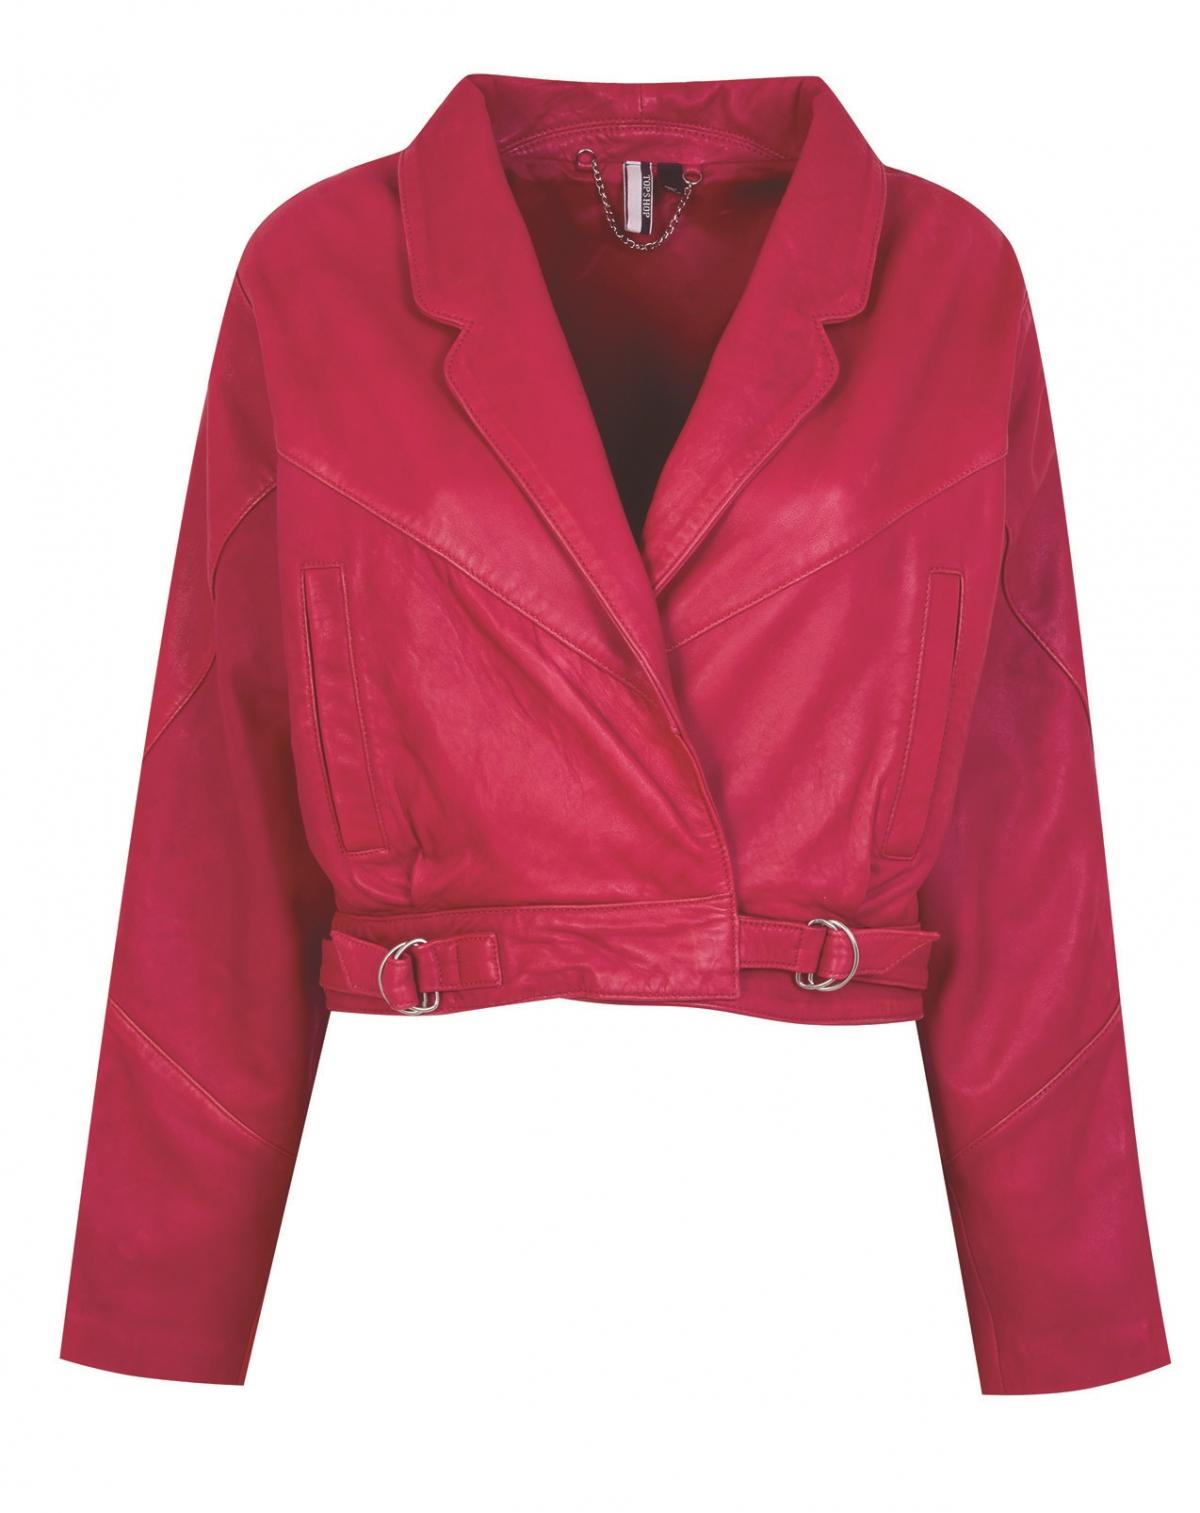 Topshop, Pink Leather Jacket, £185